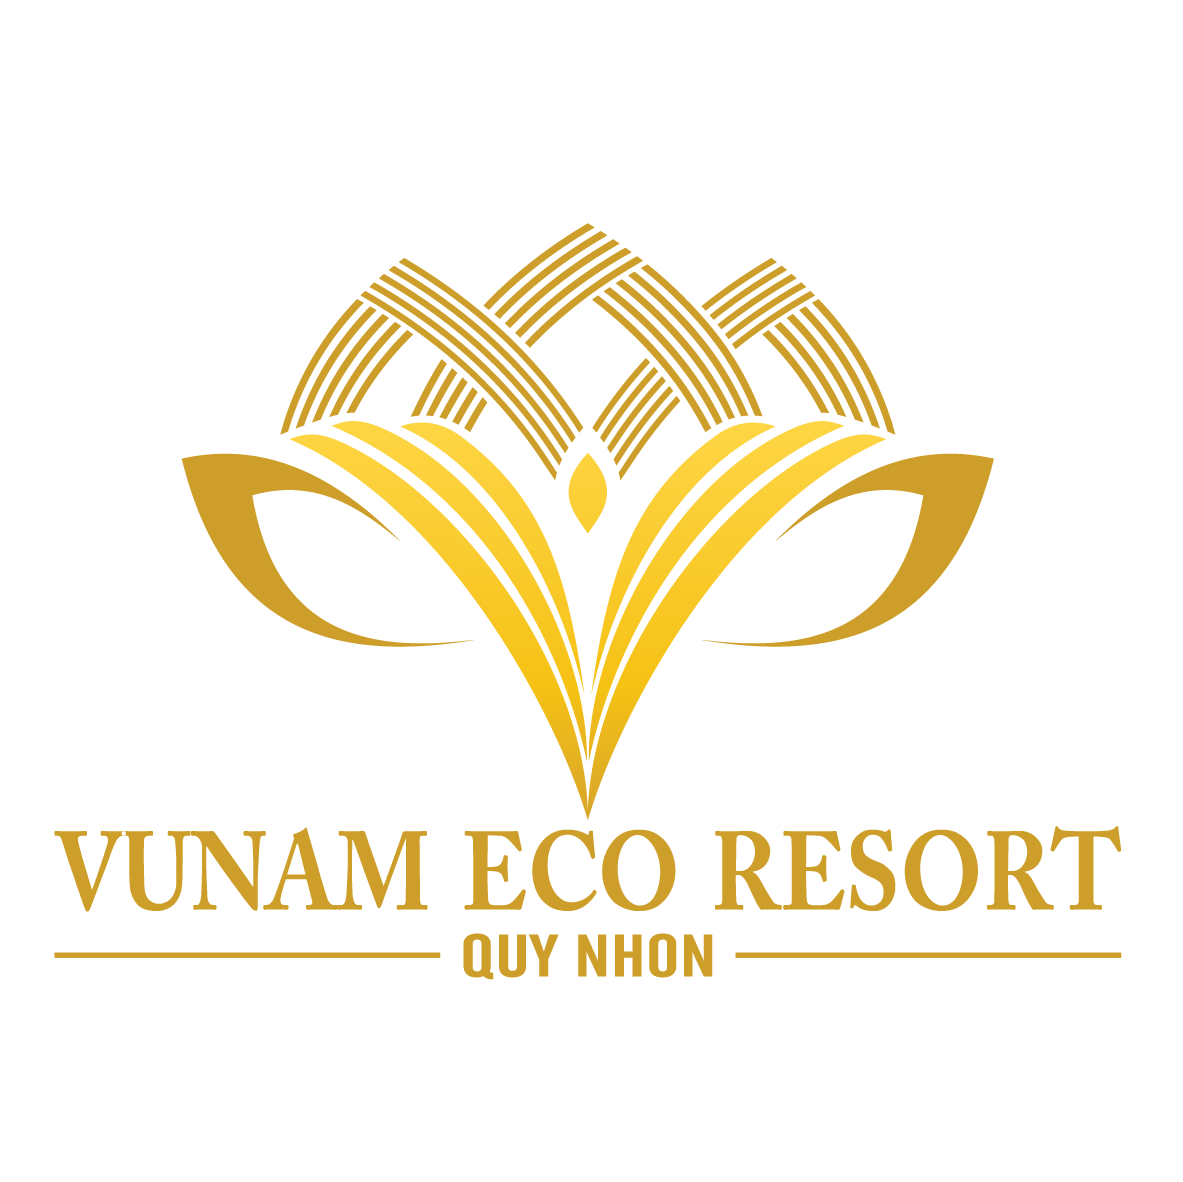 Vunam Eco Resort